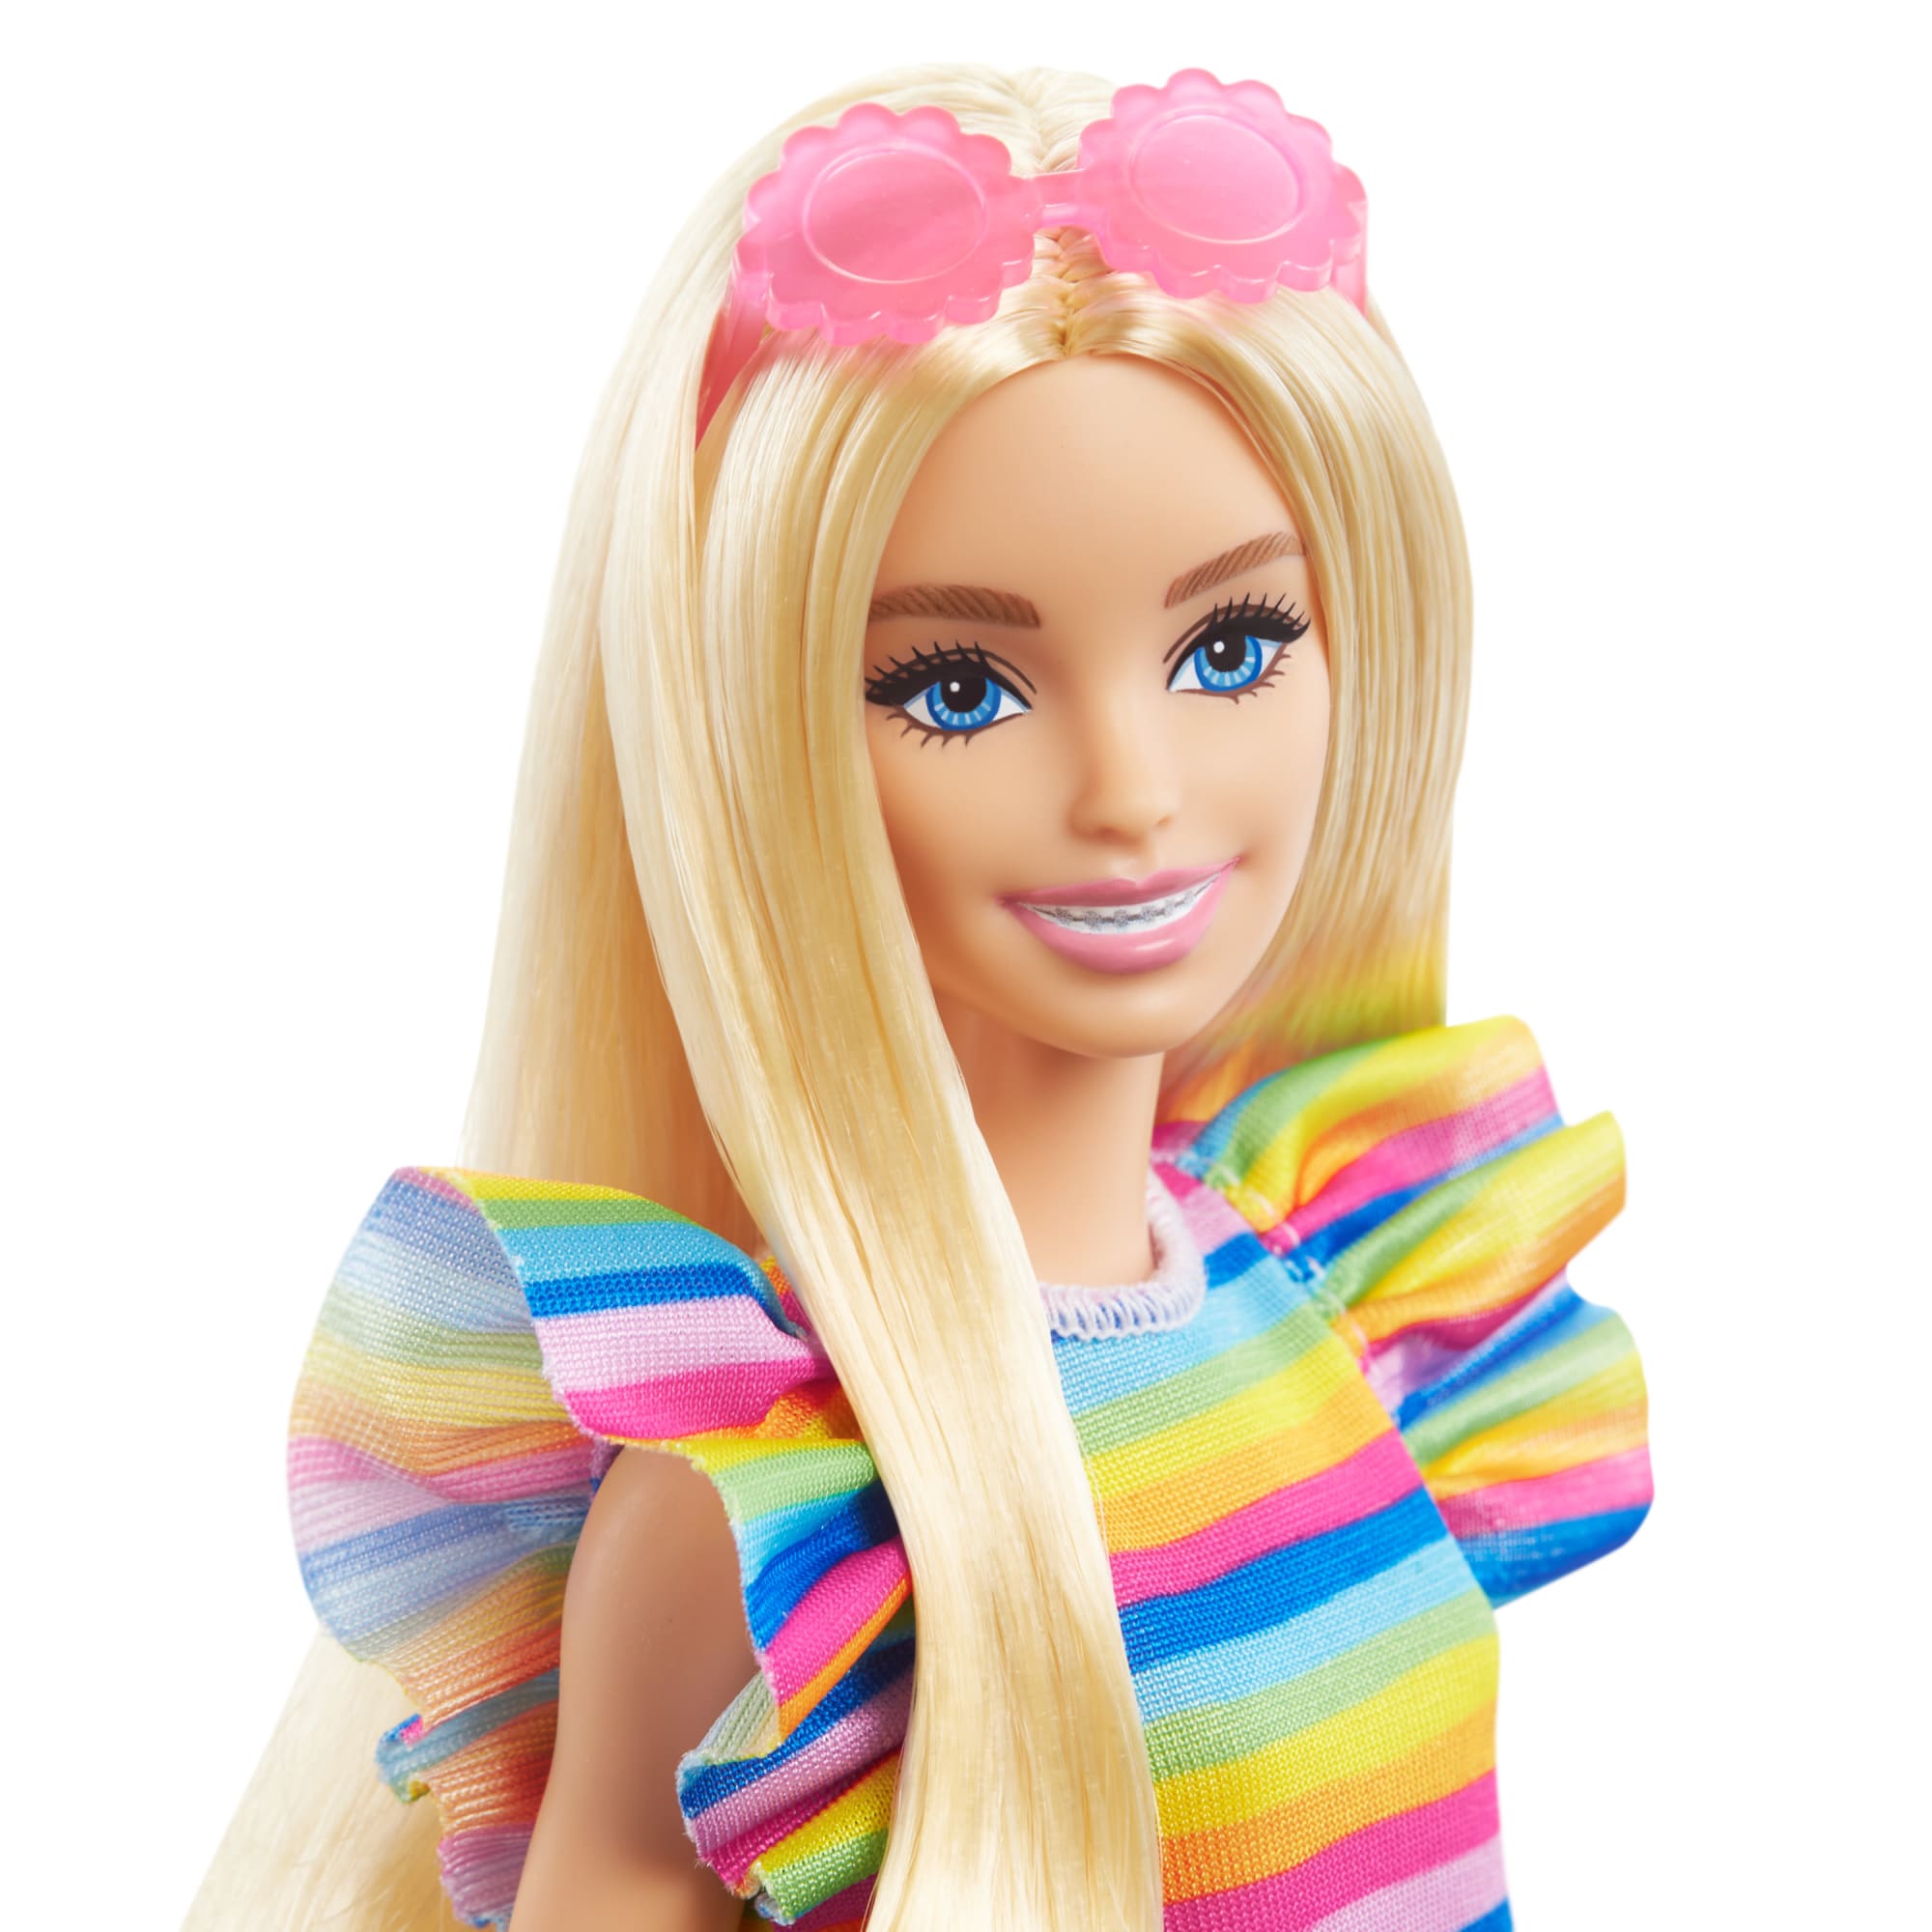 Barbie Ken Clothes -- 2 Outfits & 2 Accessories For Barbie & Ken Dolls